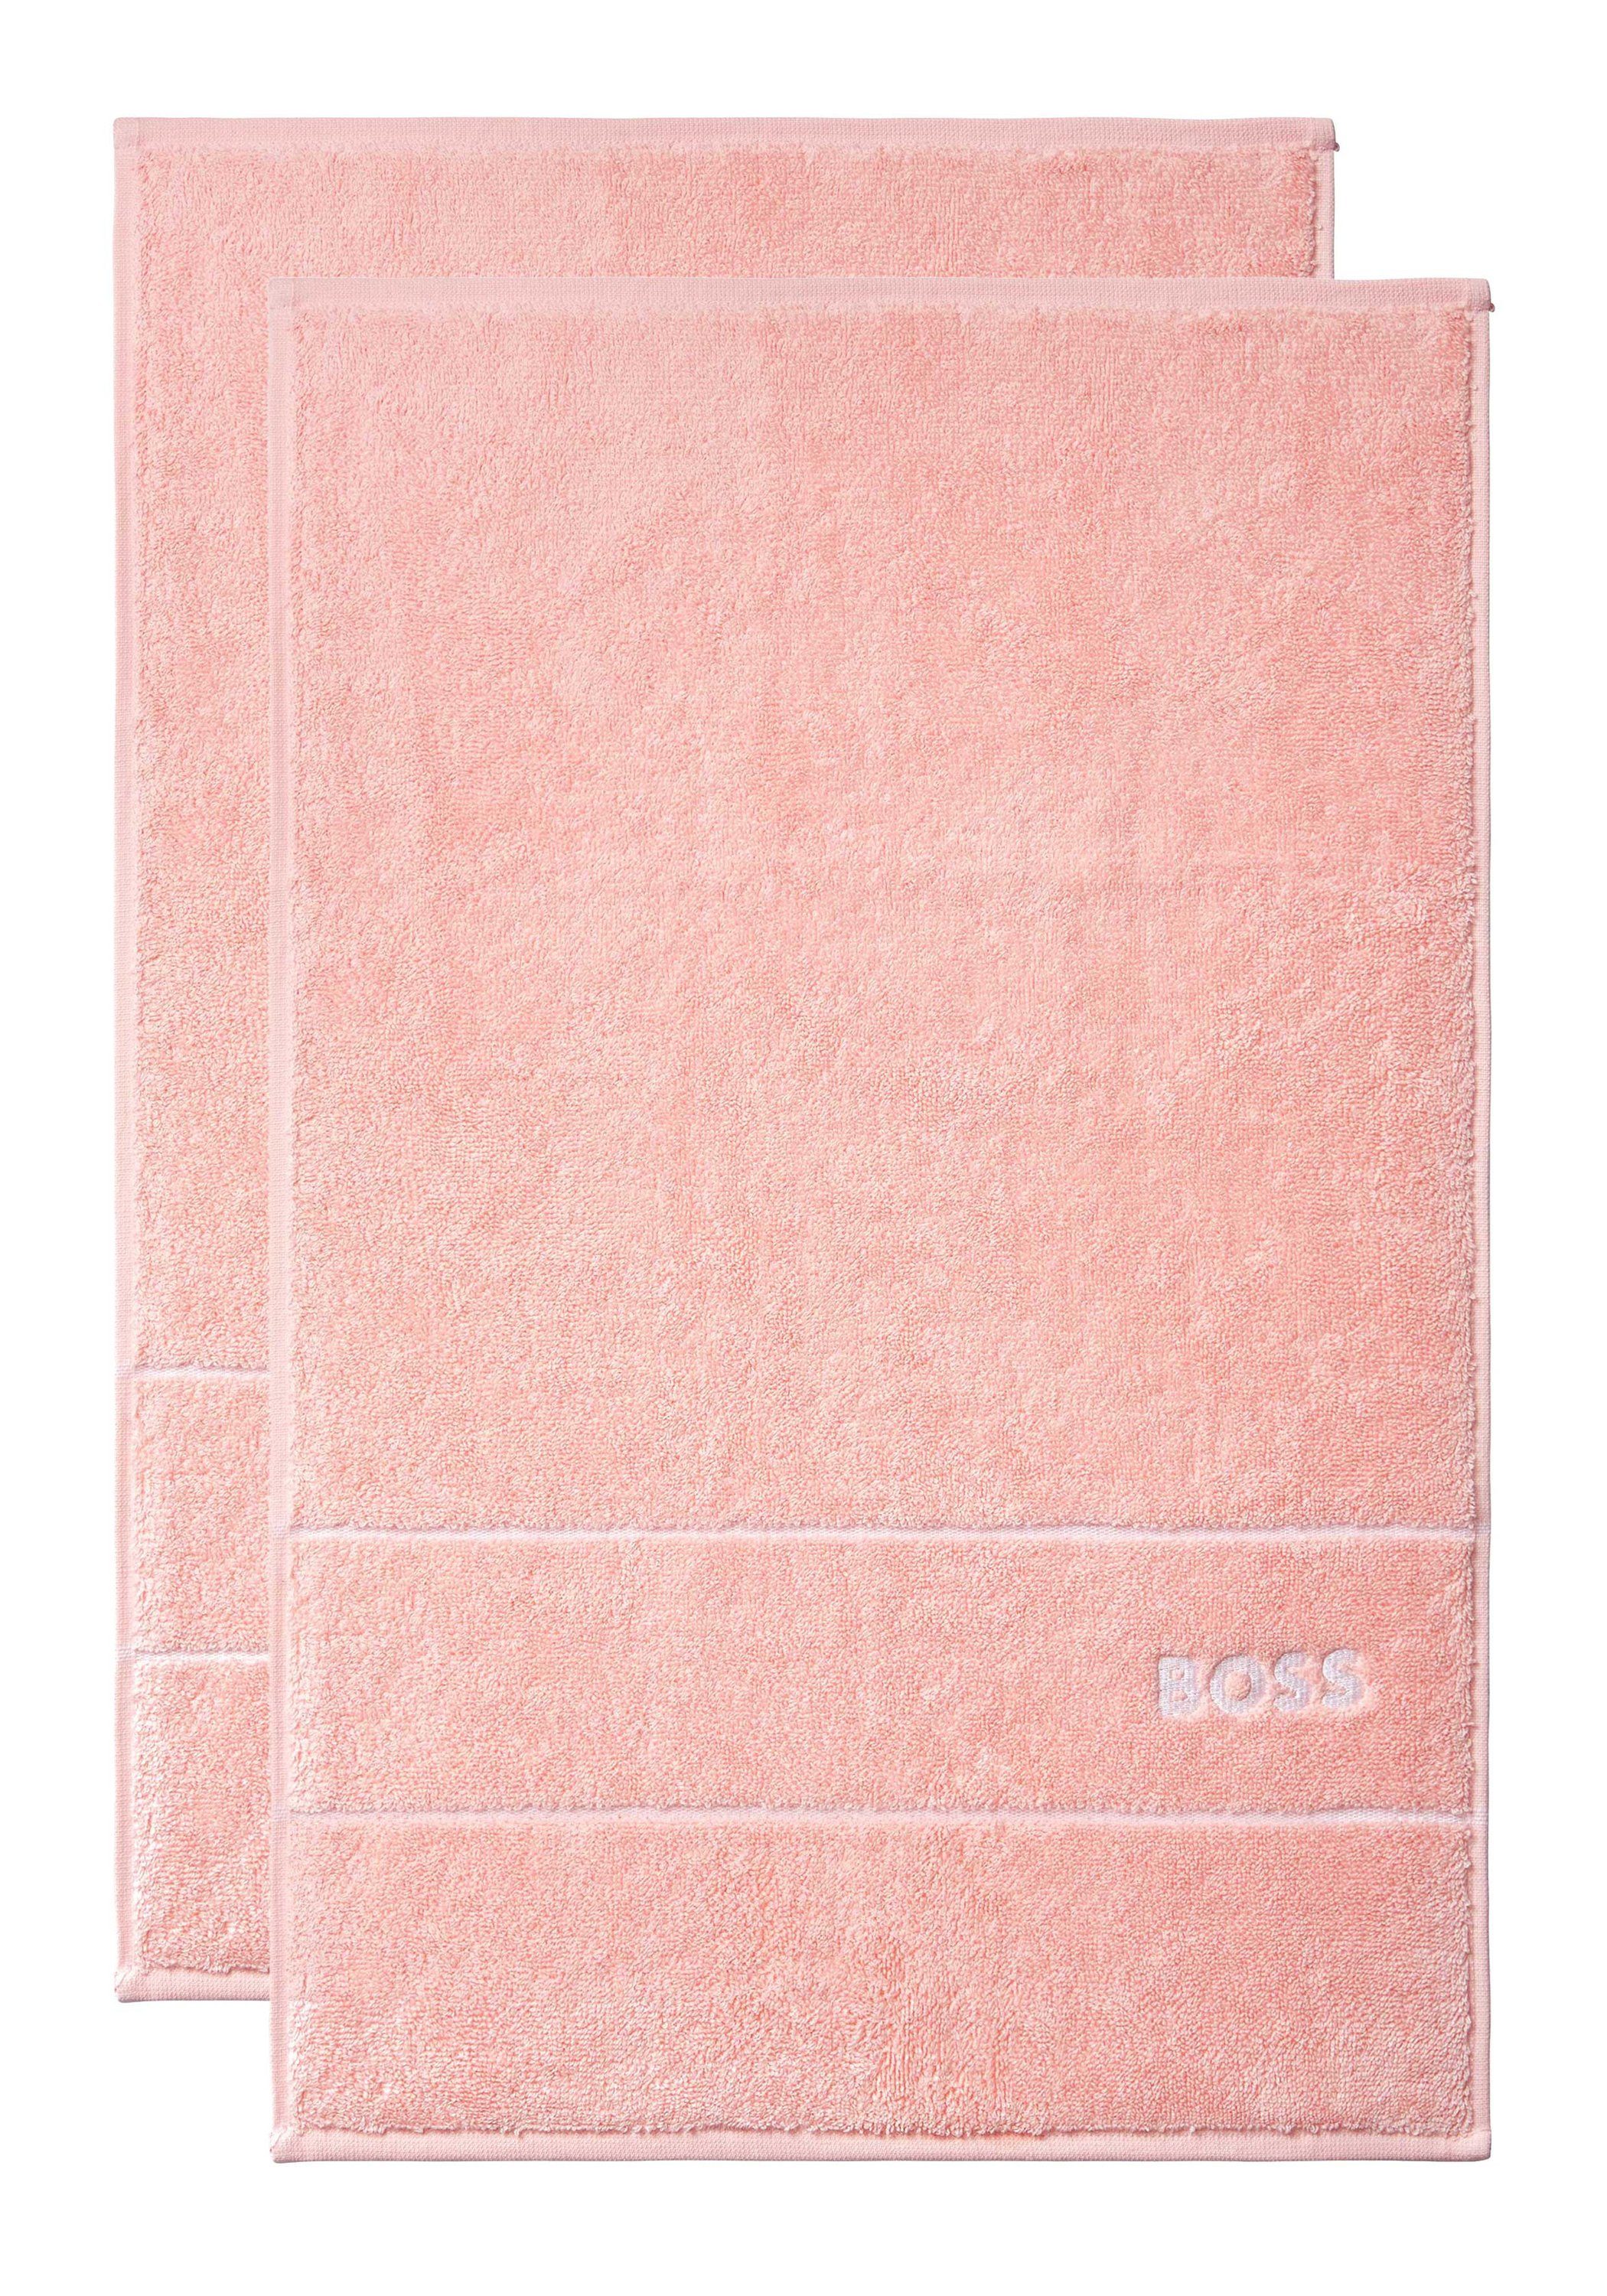 Hugo Boss Home Gästehandtücher PLAIN PRIMRON modernem Design 100% Baumwolle, (2tlg), mit